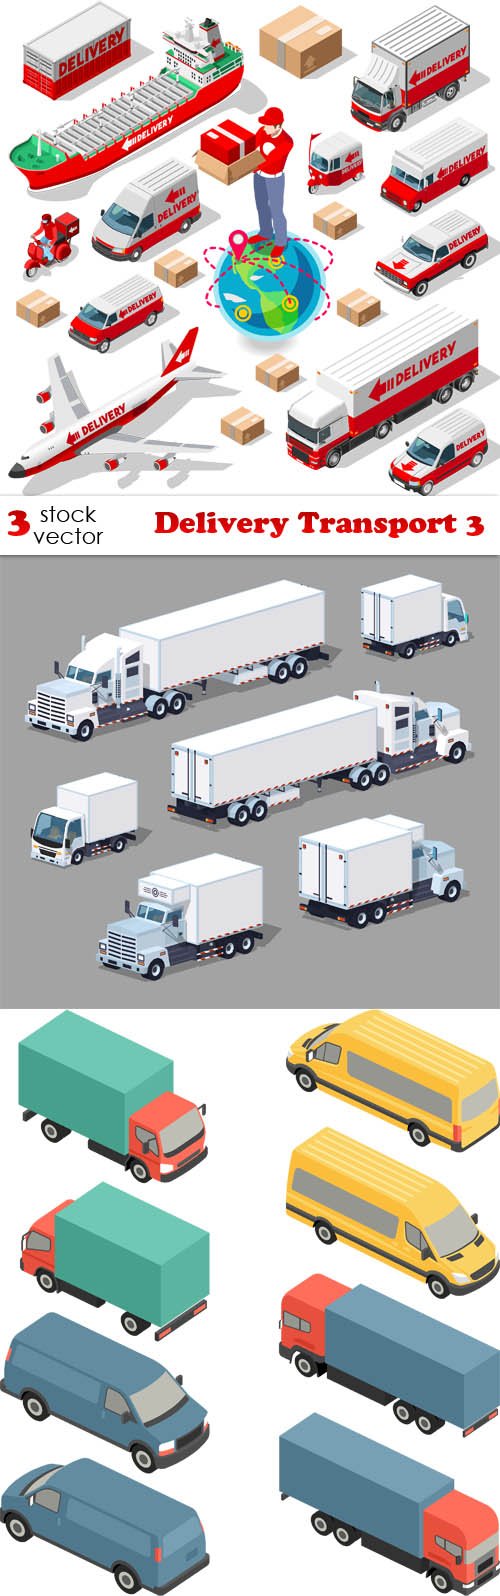 Vectors - Delivery Transport 3